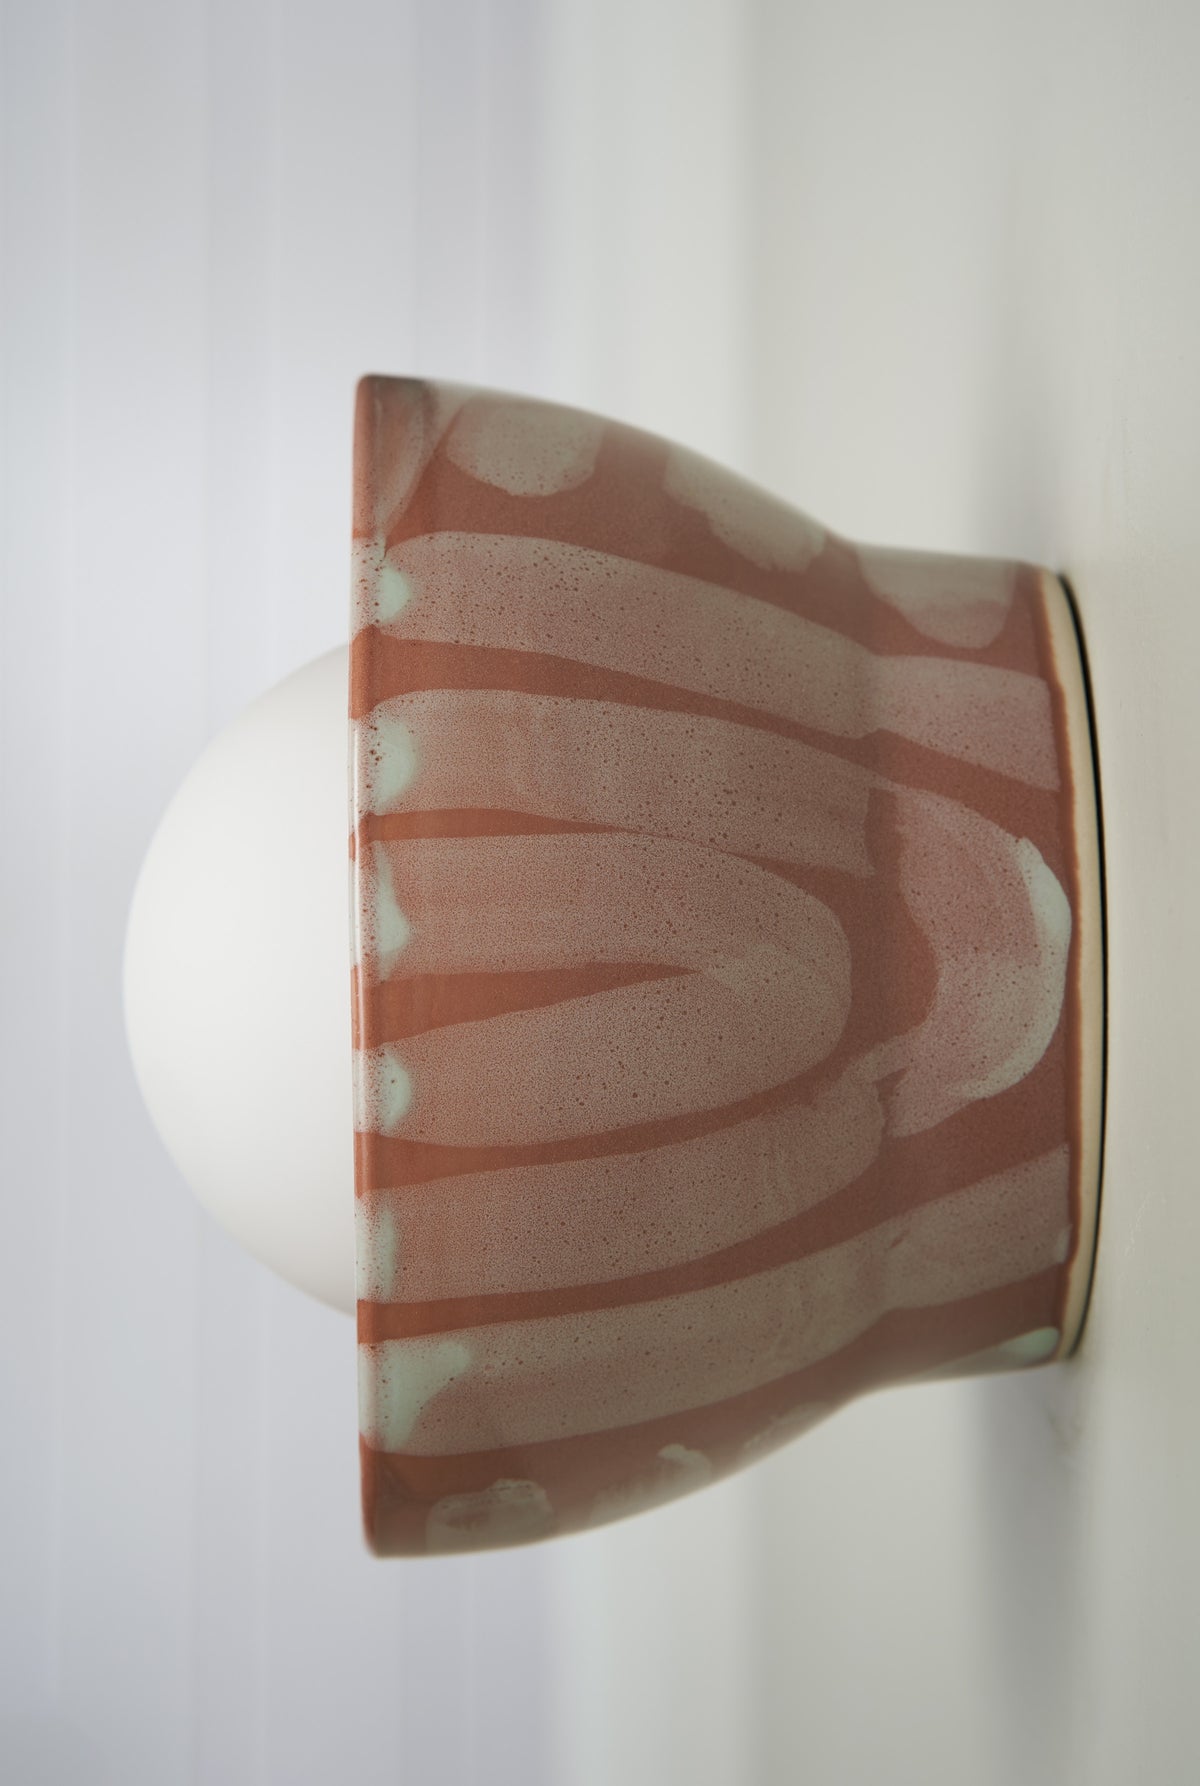 Ceramic Wall Bowl Sconce Light / Rose Spaghetti Junction